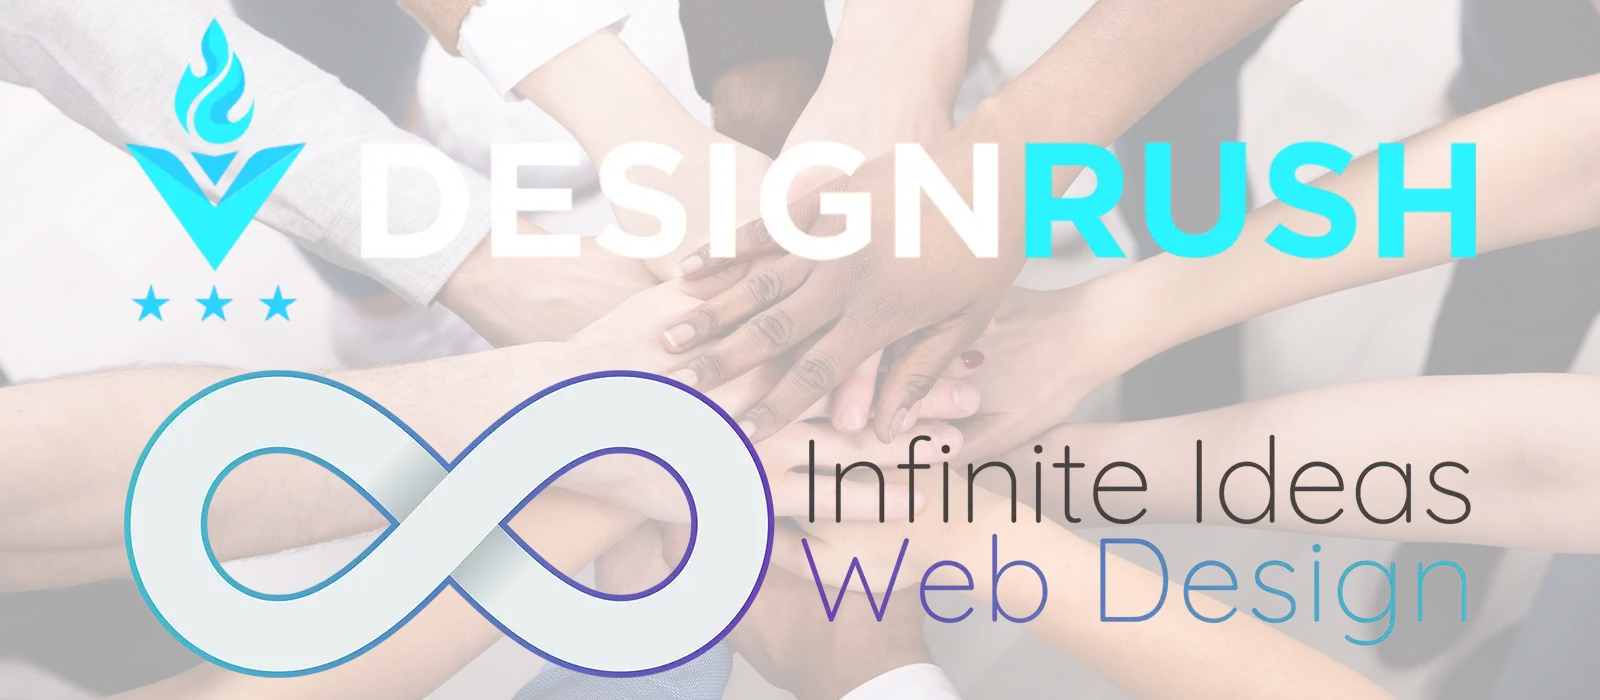 DesignRush and Infinite Ideas: A Pioneering Web Design Partnership